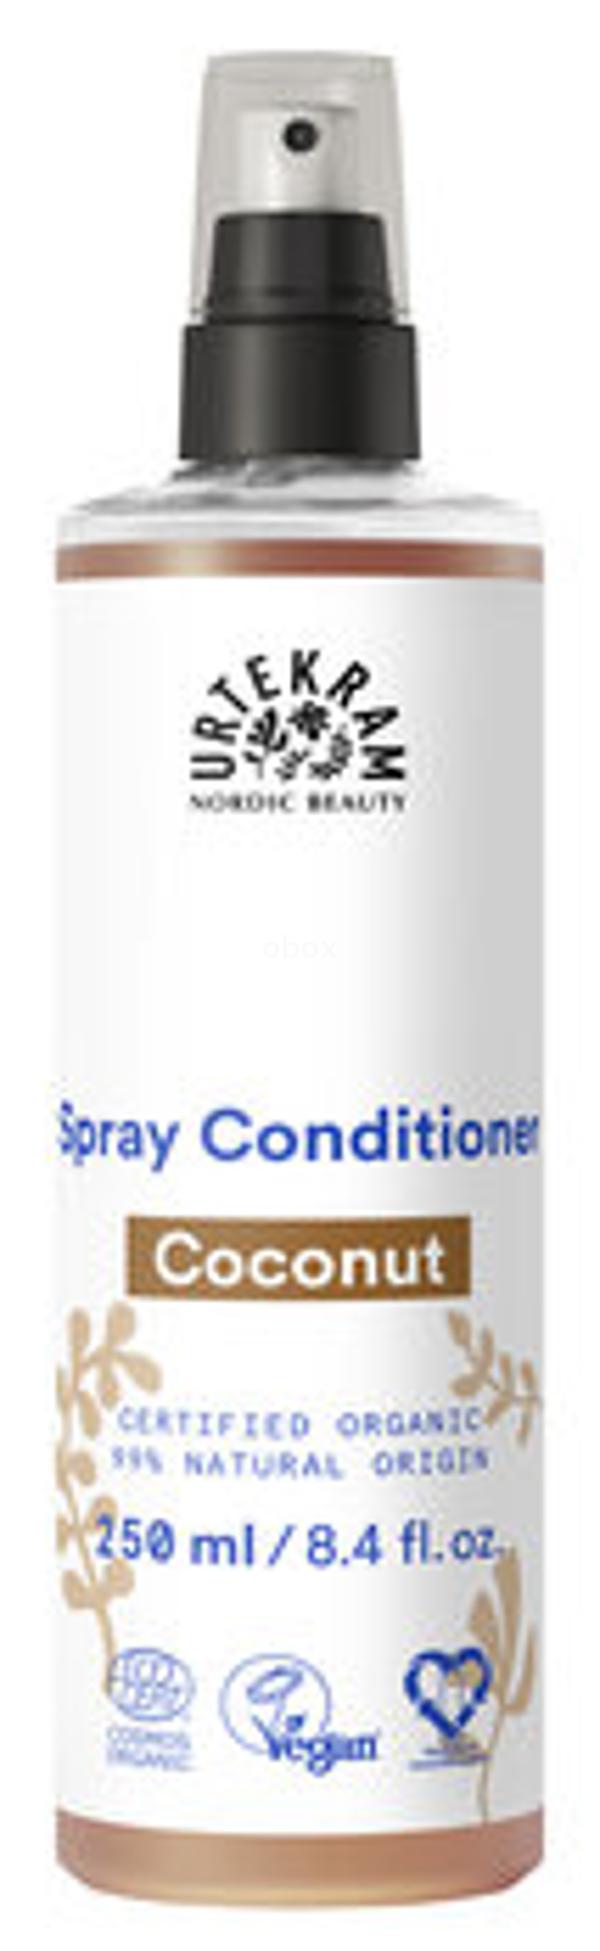 Produktfoto zu Kokos Spray Conditioner